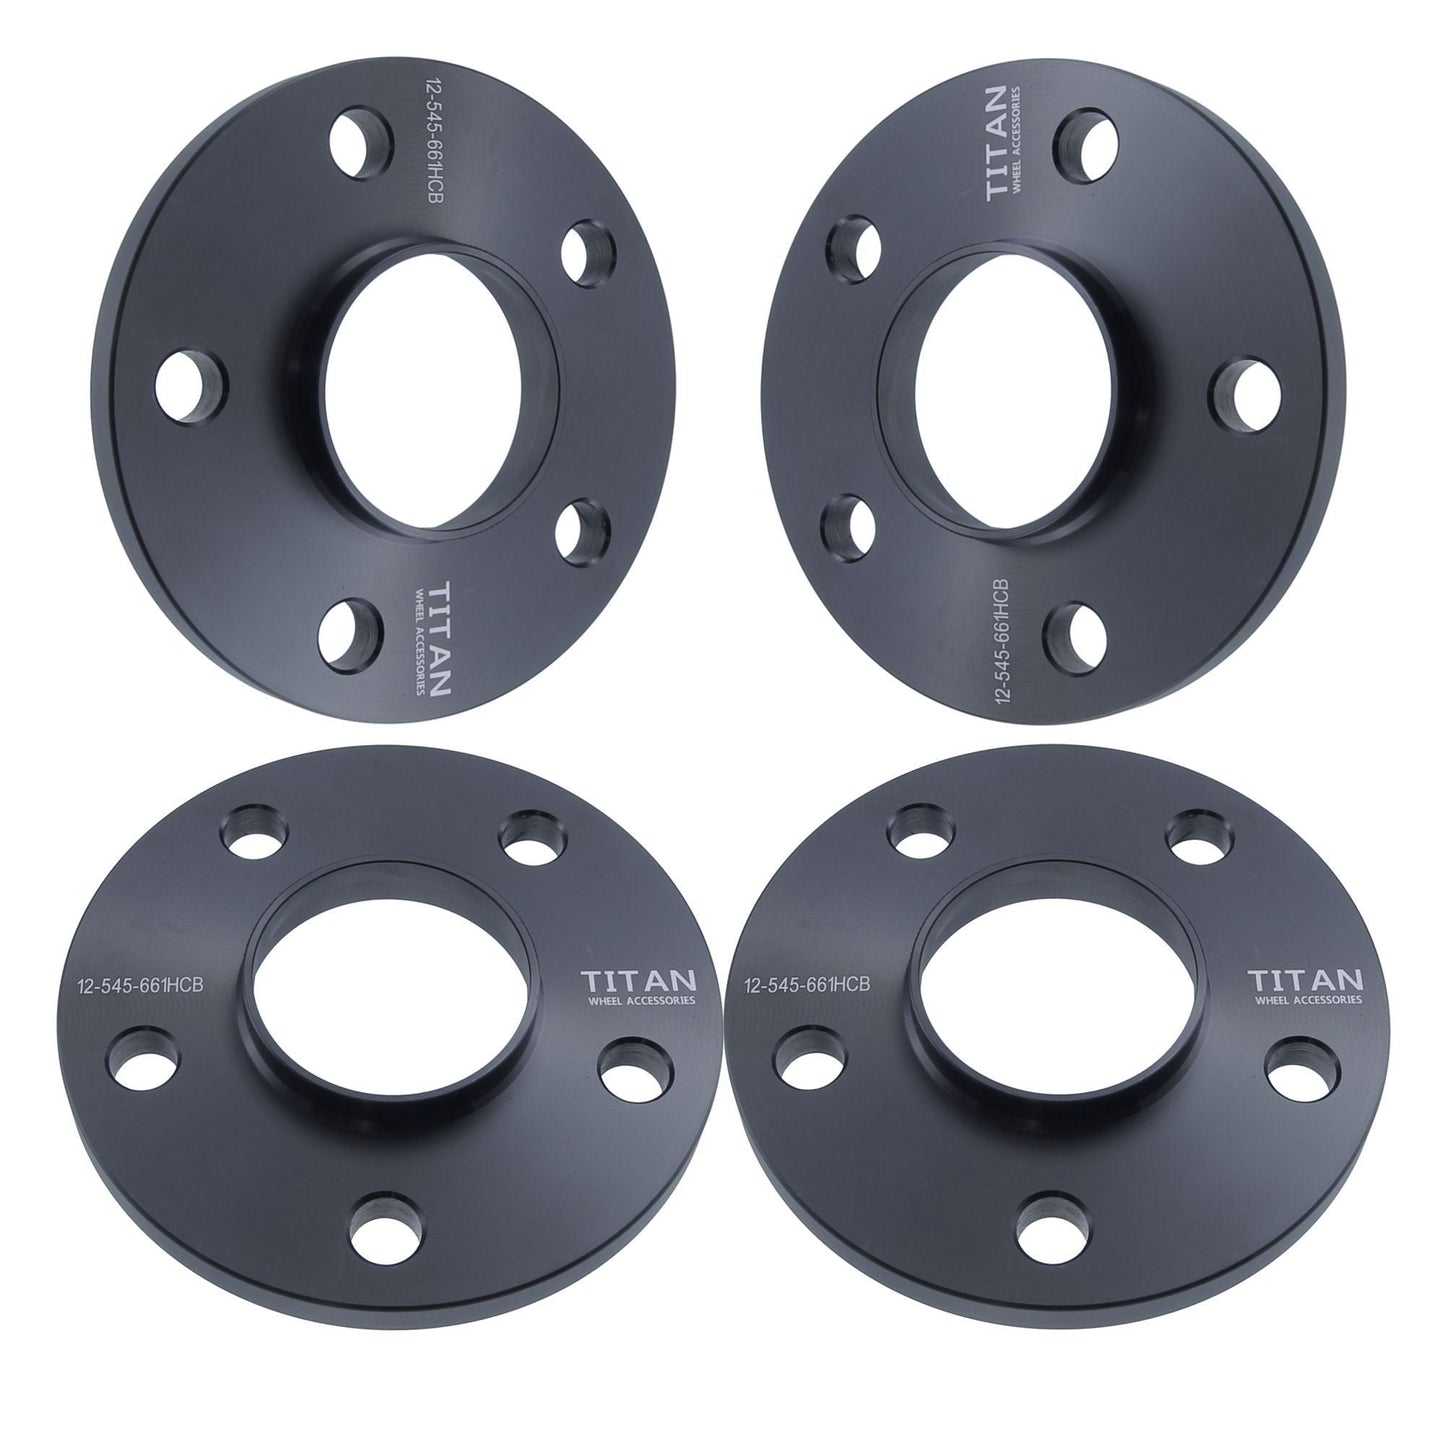 15mm Titan Wheel Spacers for Nissan Infiniti Q50 G35 G37 350Z 370Z Altima Maxima | 5x114.3 | 66.1 Hubcentric | Set of 4 | Titan Wheel Accessories